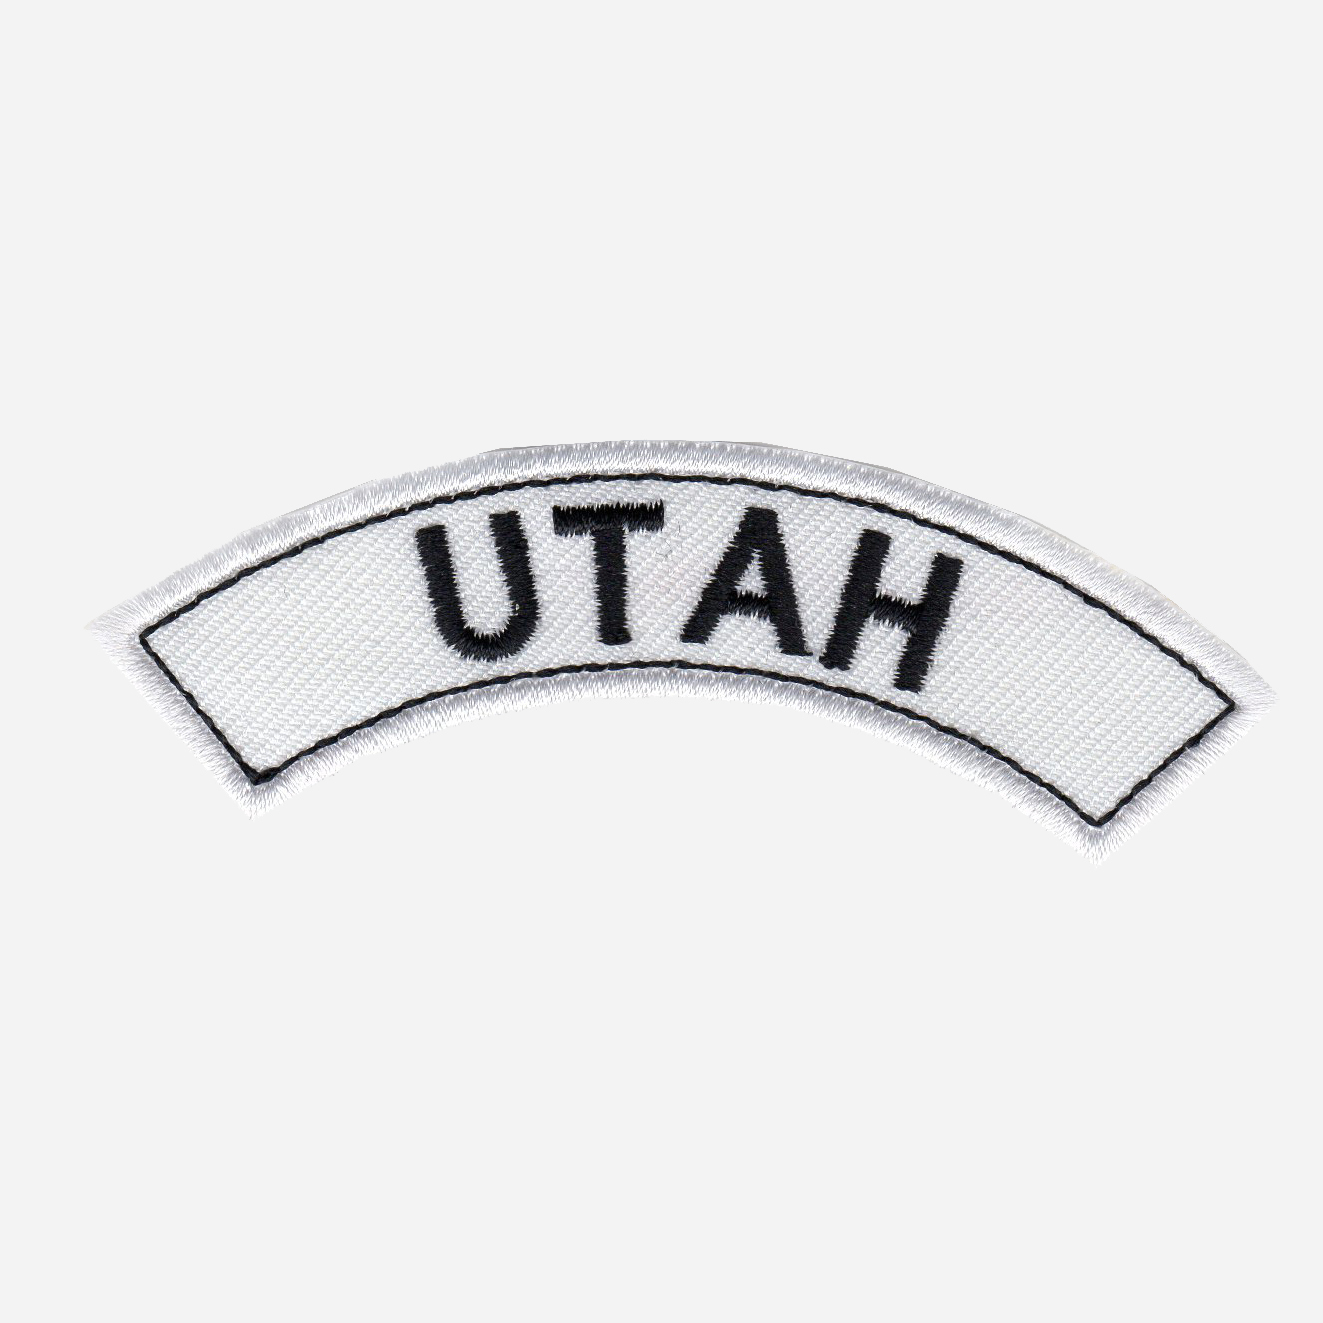 Utah Mini Top Rocker Embroidered Vest Patch